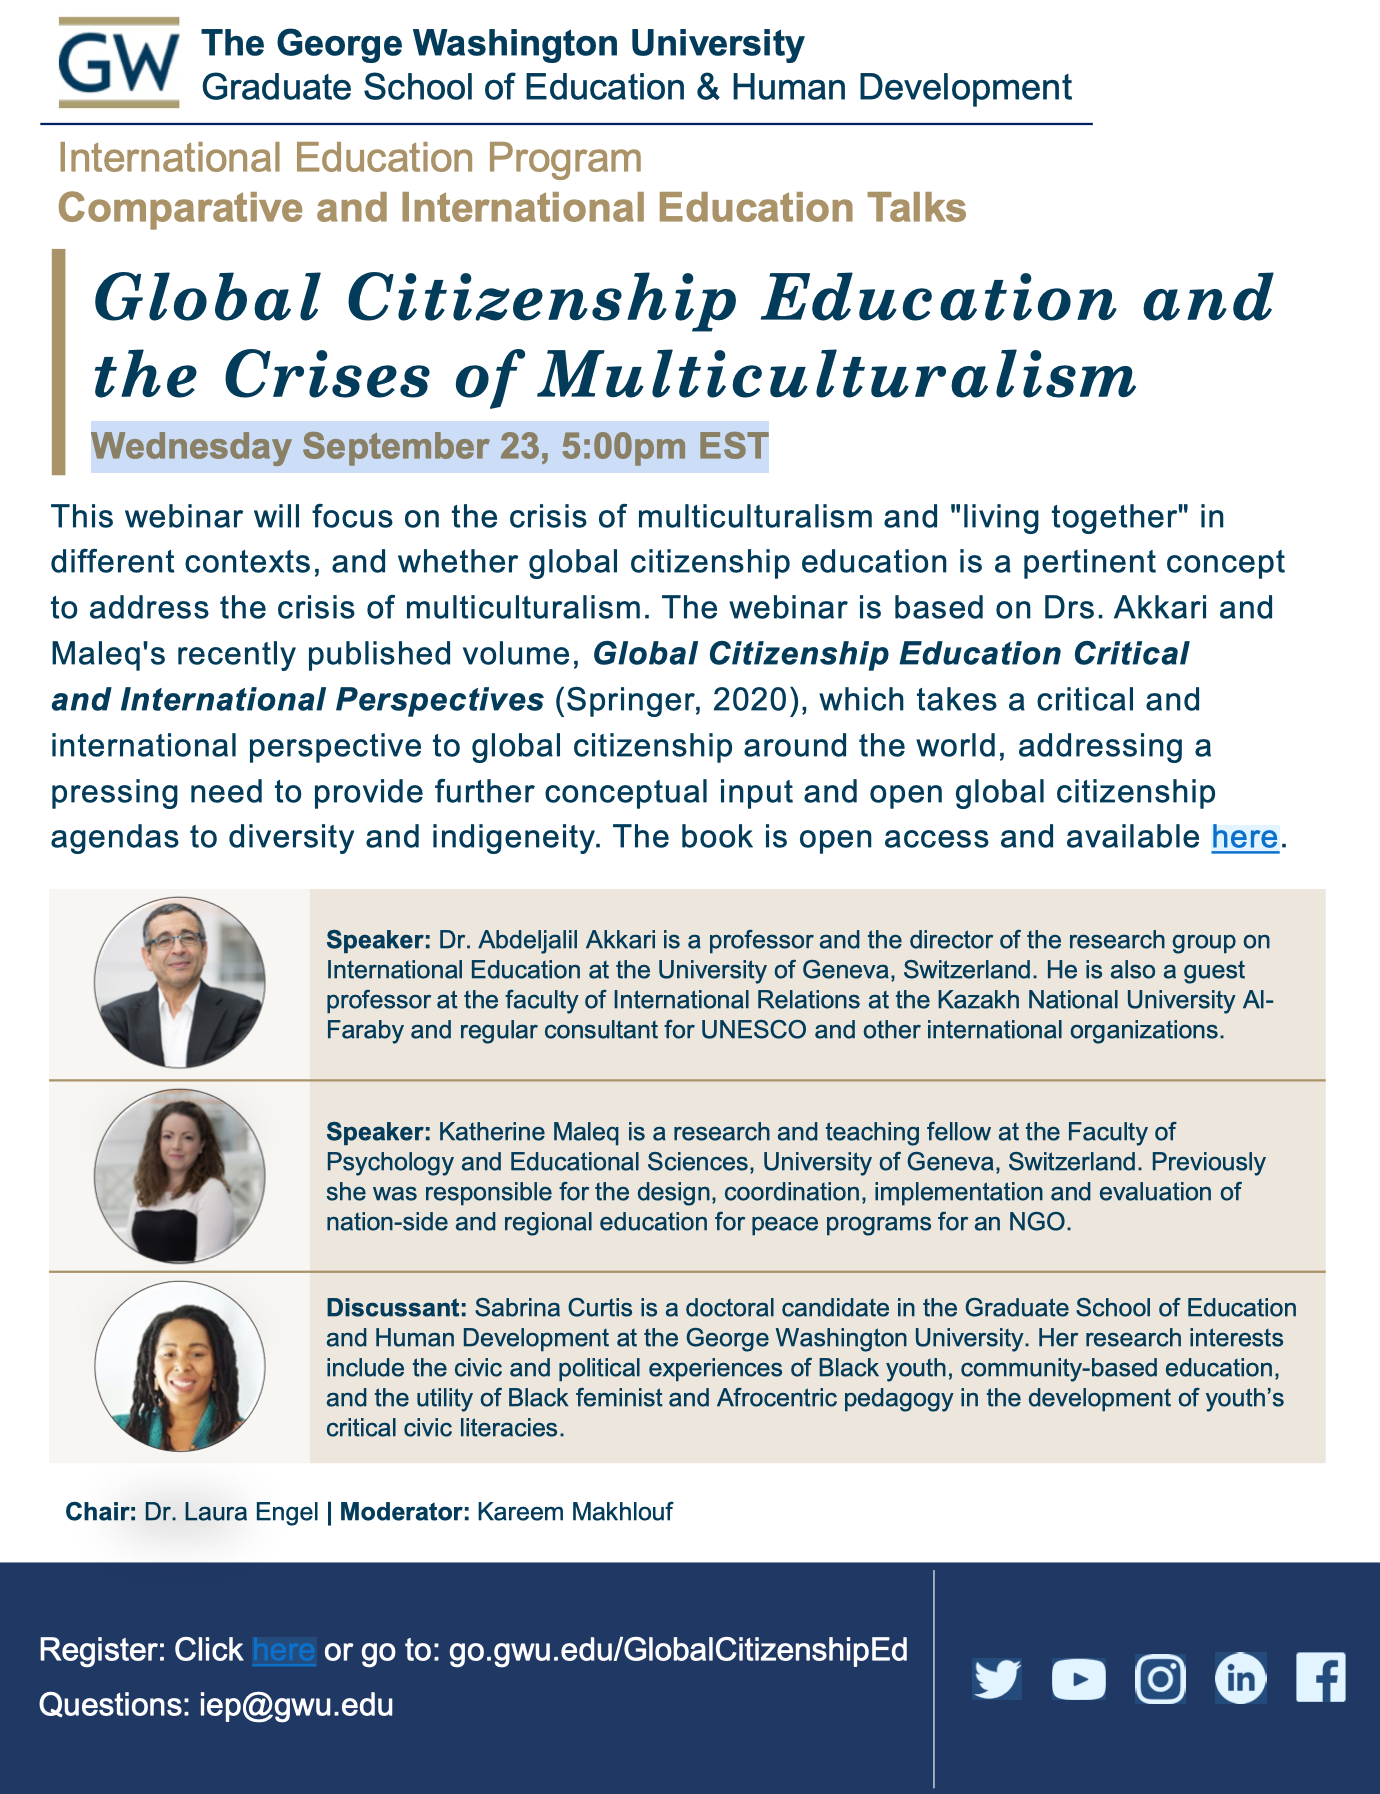 GWU International & Comparative Education Talks_Sept 23 Event Flyer.png